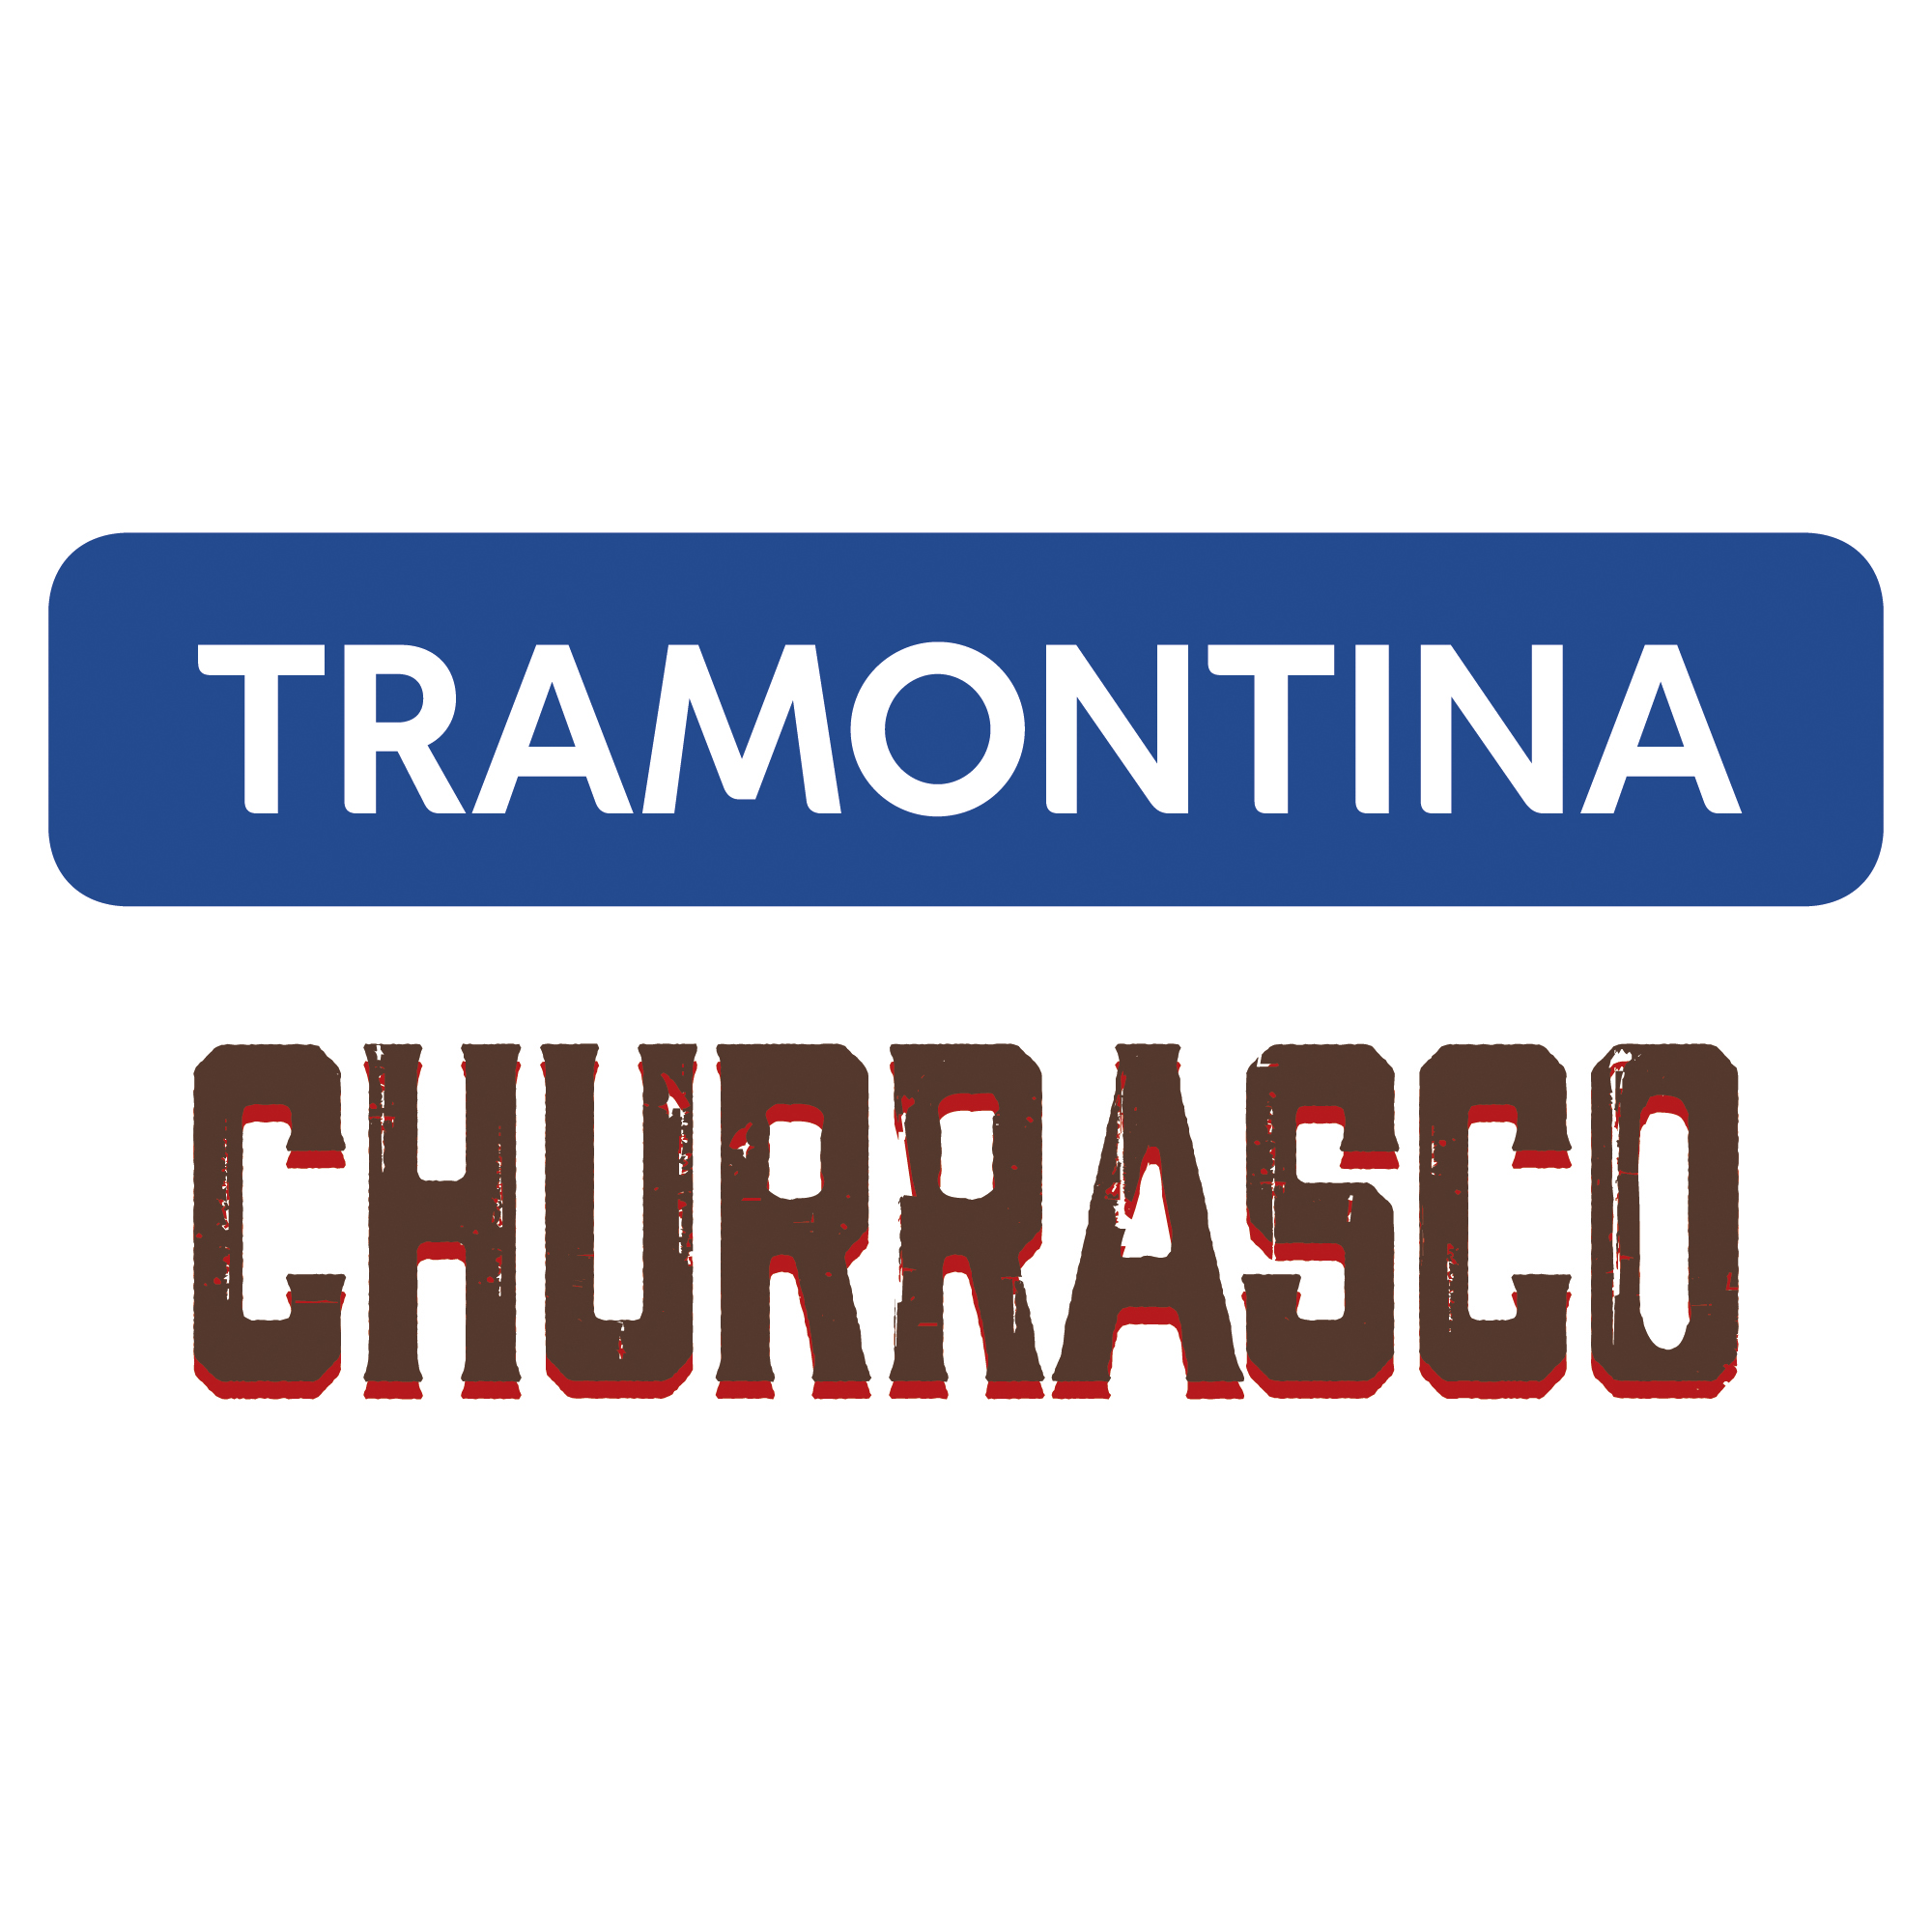 Guante Térmico Tramontina Churrasco.